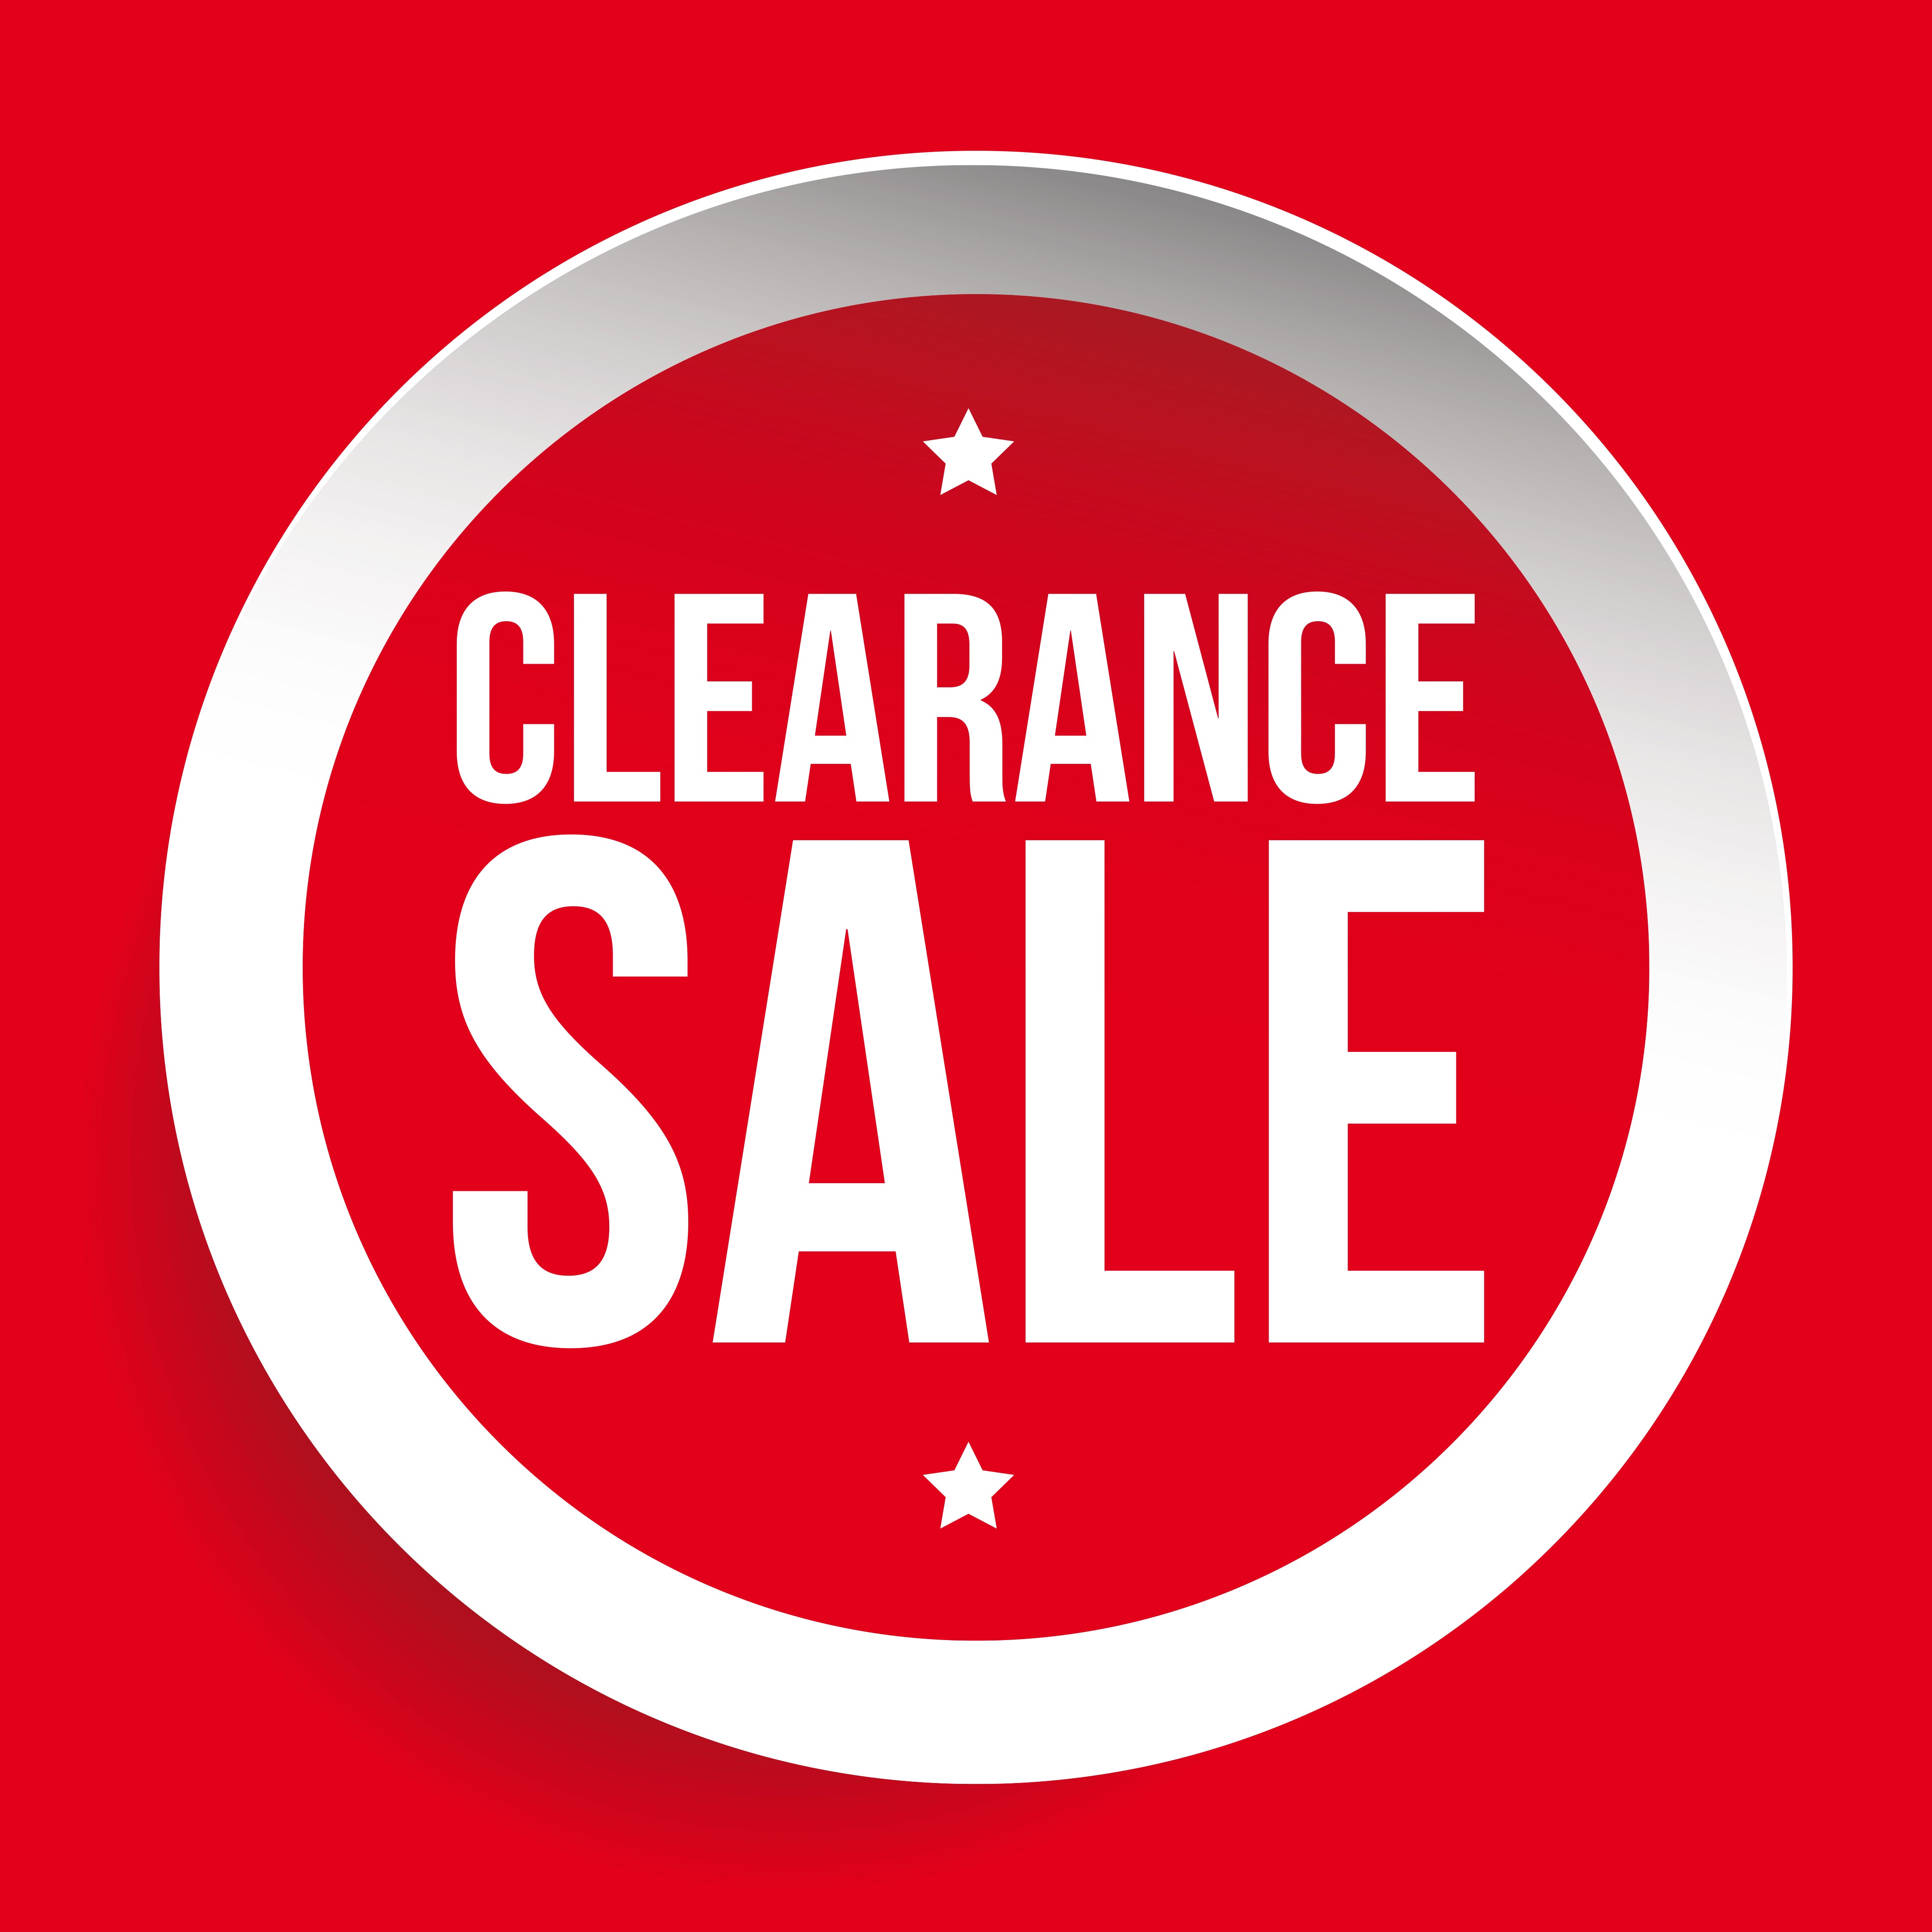  Clearance sale